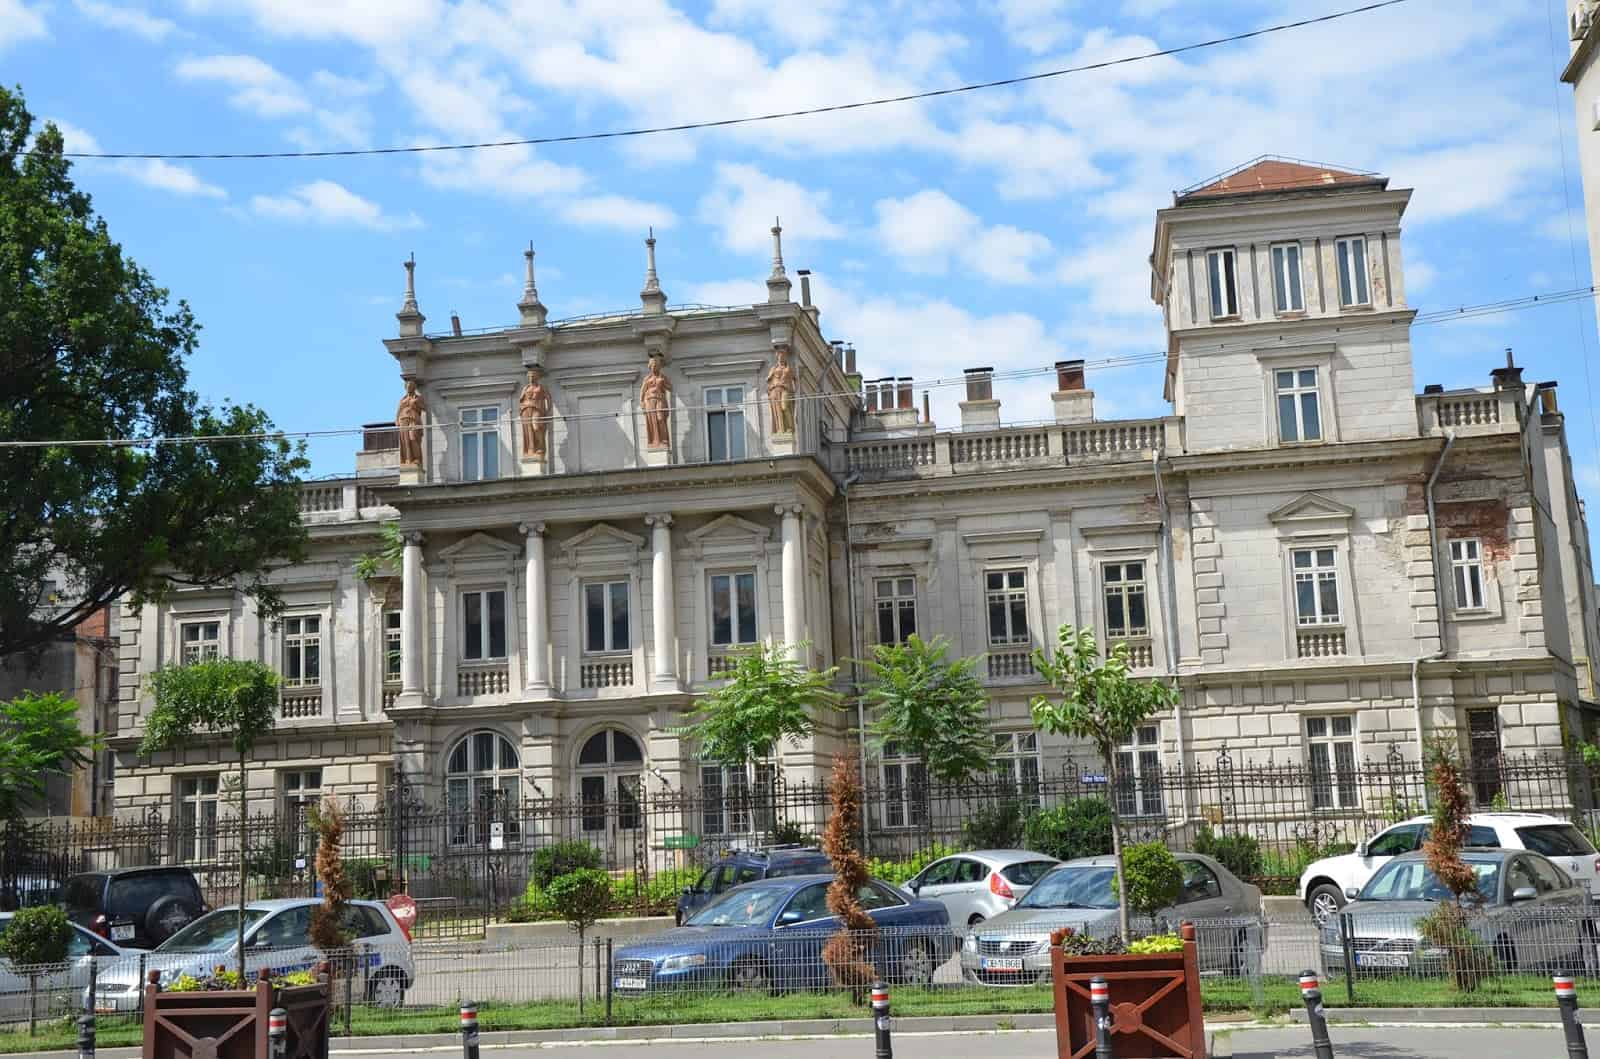 Știrbei Palace on Victory Avenue in Bucharest, Romania